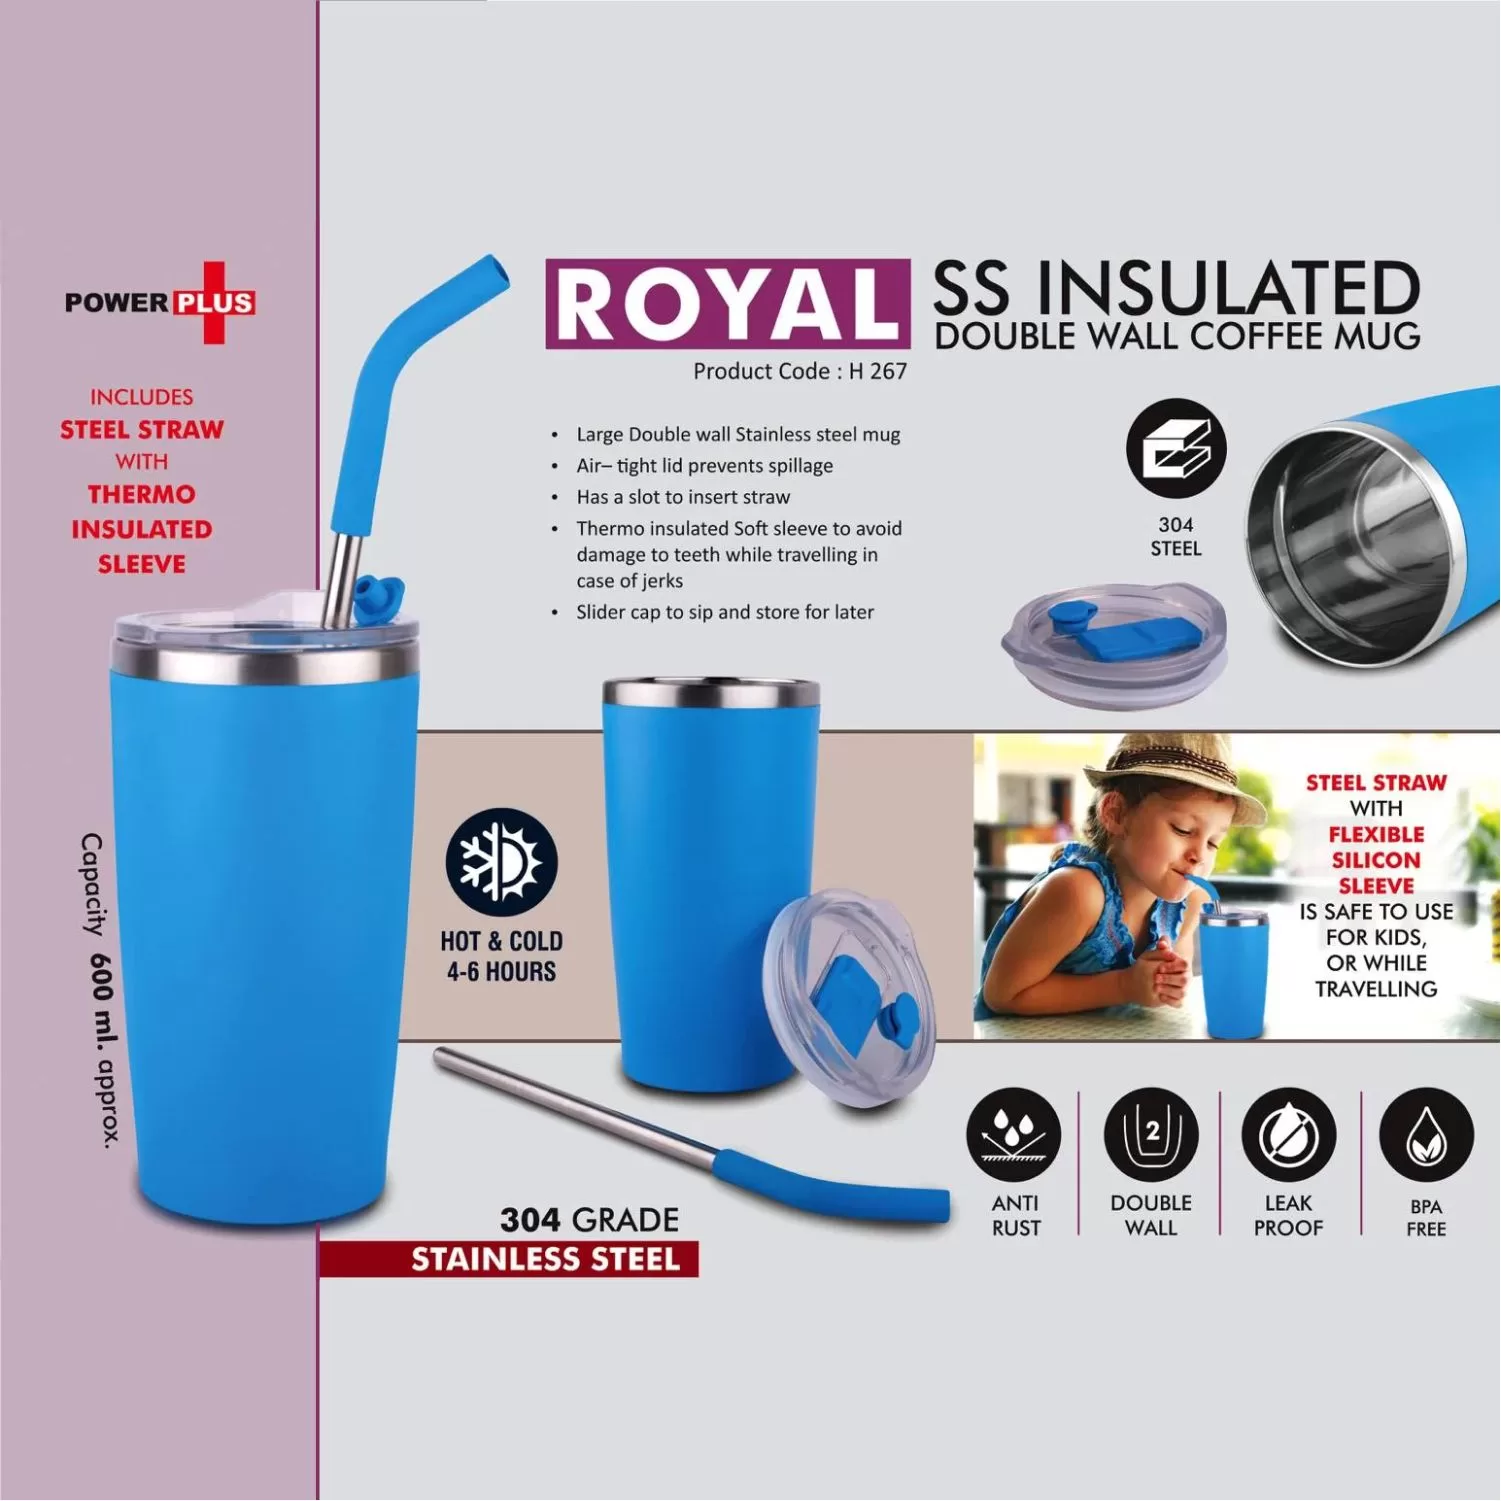 Royal: Stainless Steel Double Wall Coffee Mug